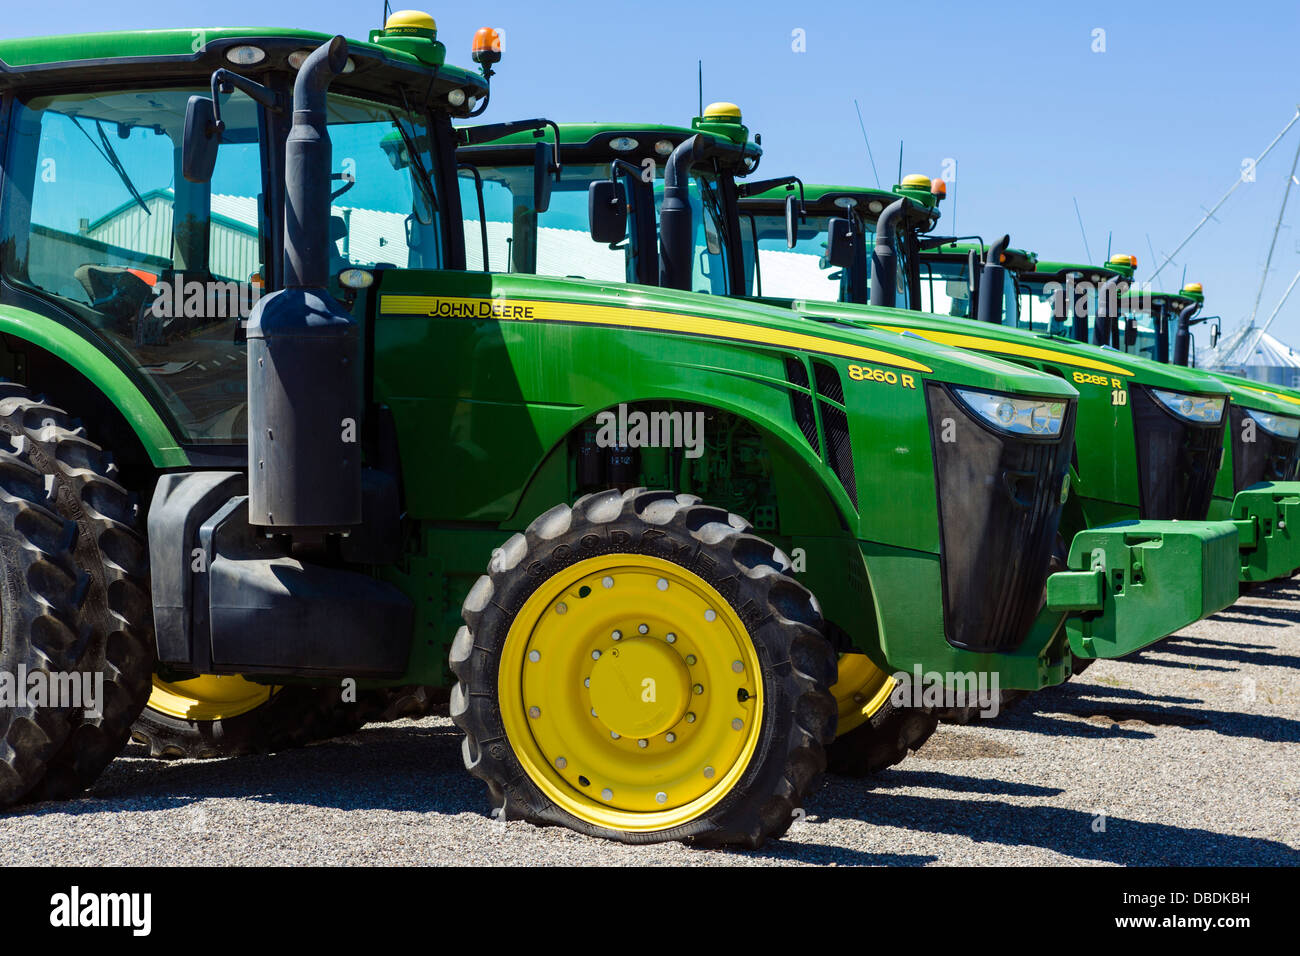 John deere traktoren -Fotos und -Bildmaterial in hoher Auflösung – Alamy